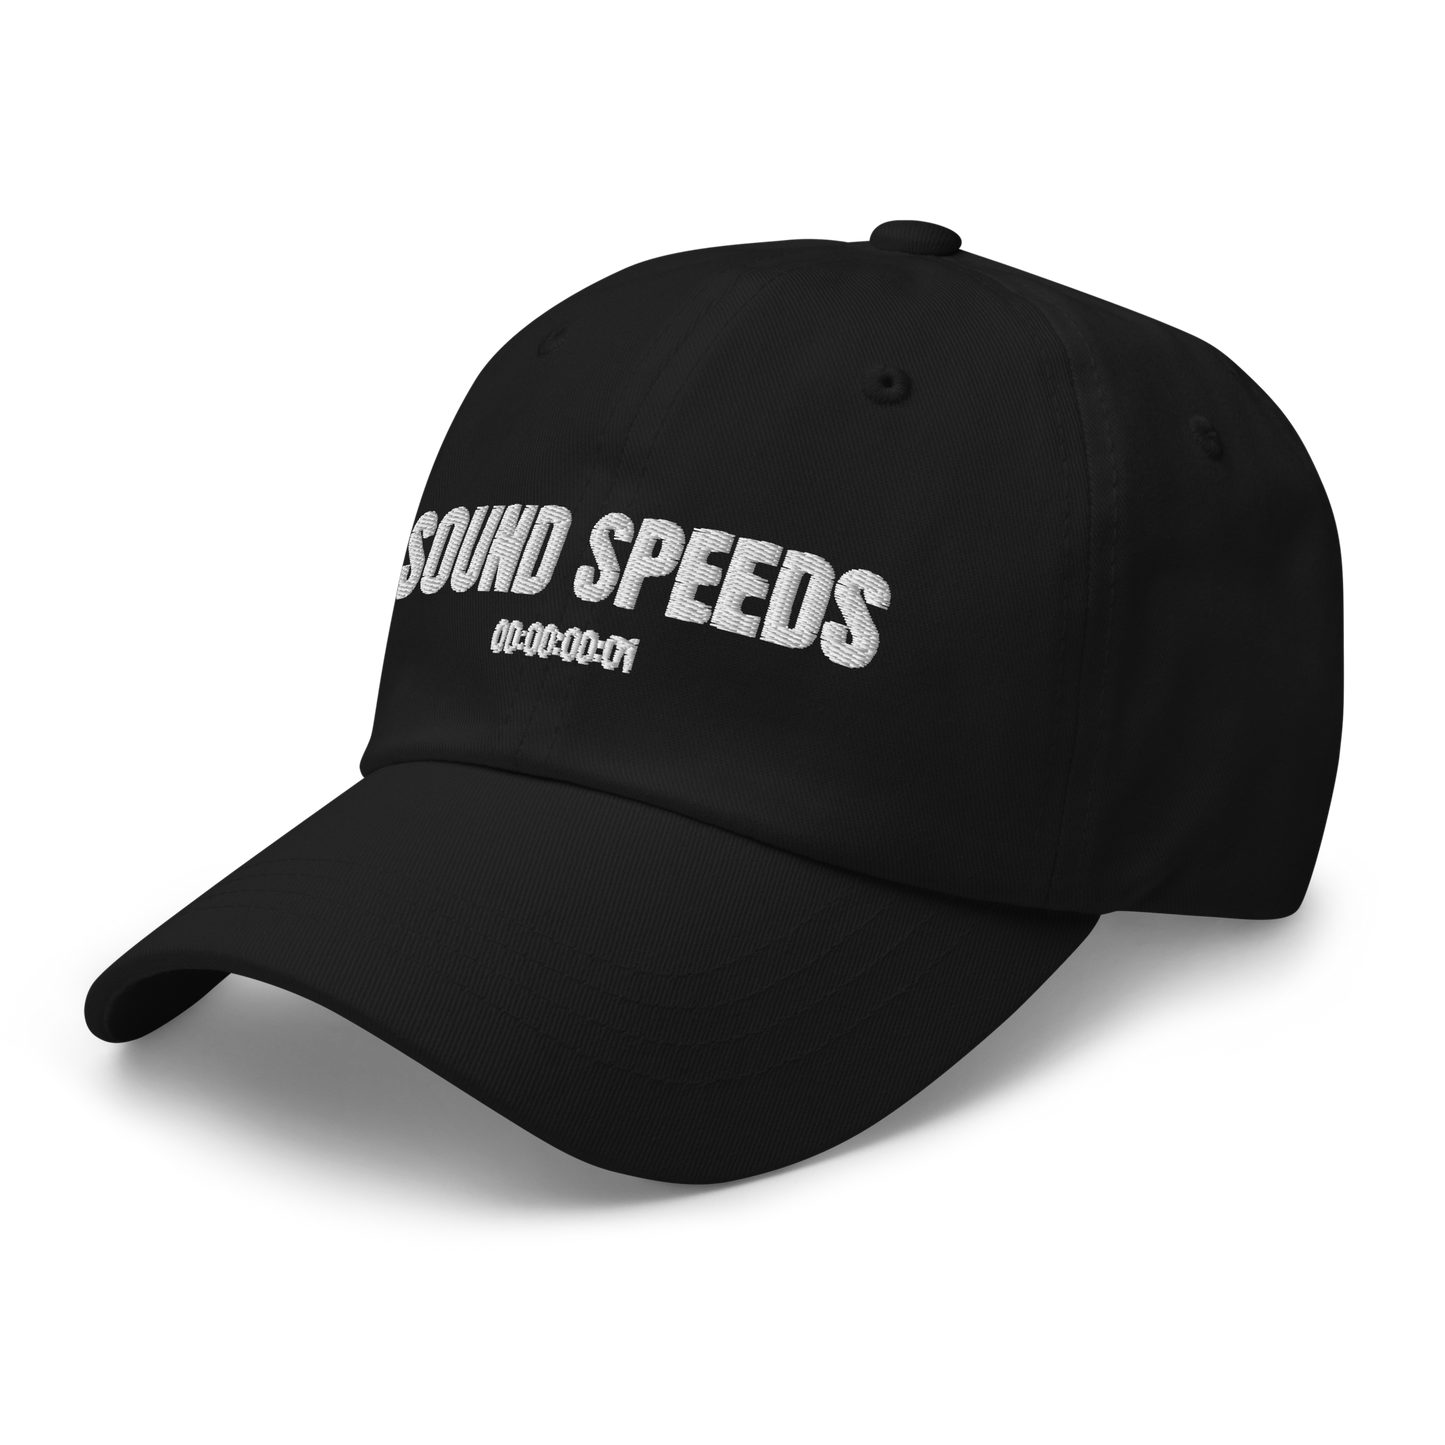 Sound Speeds Classic Dad Hat (Variant A)